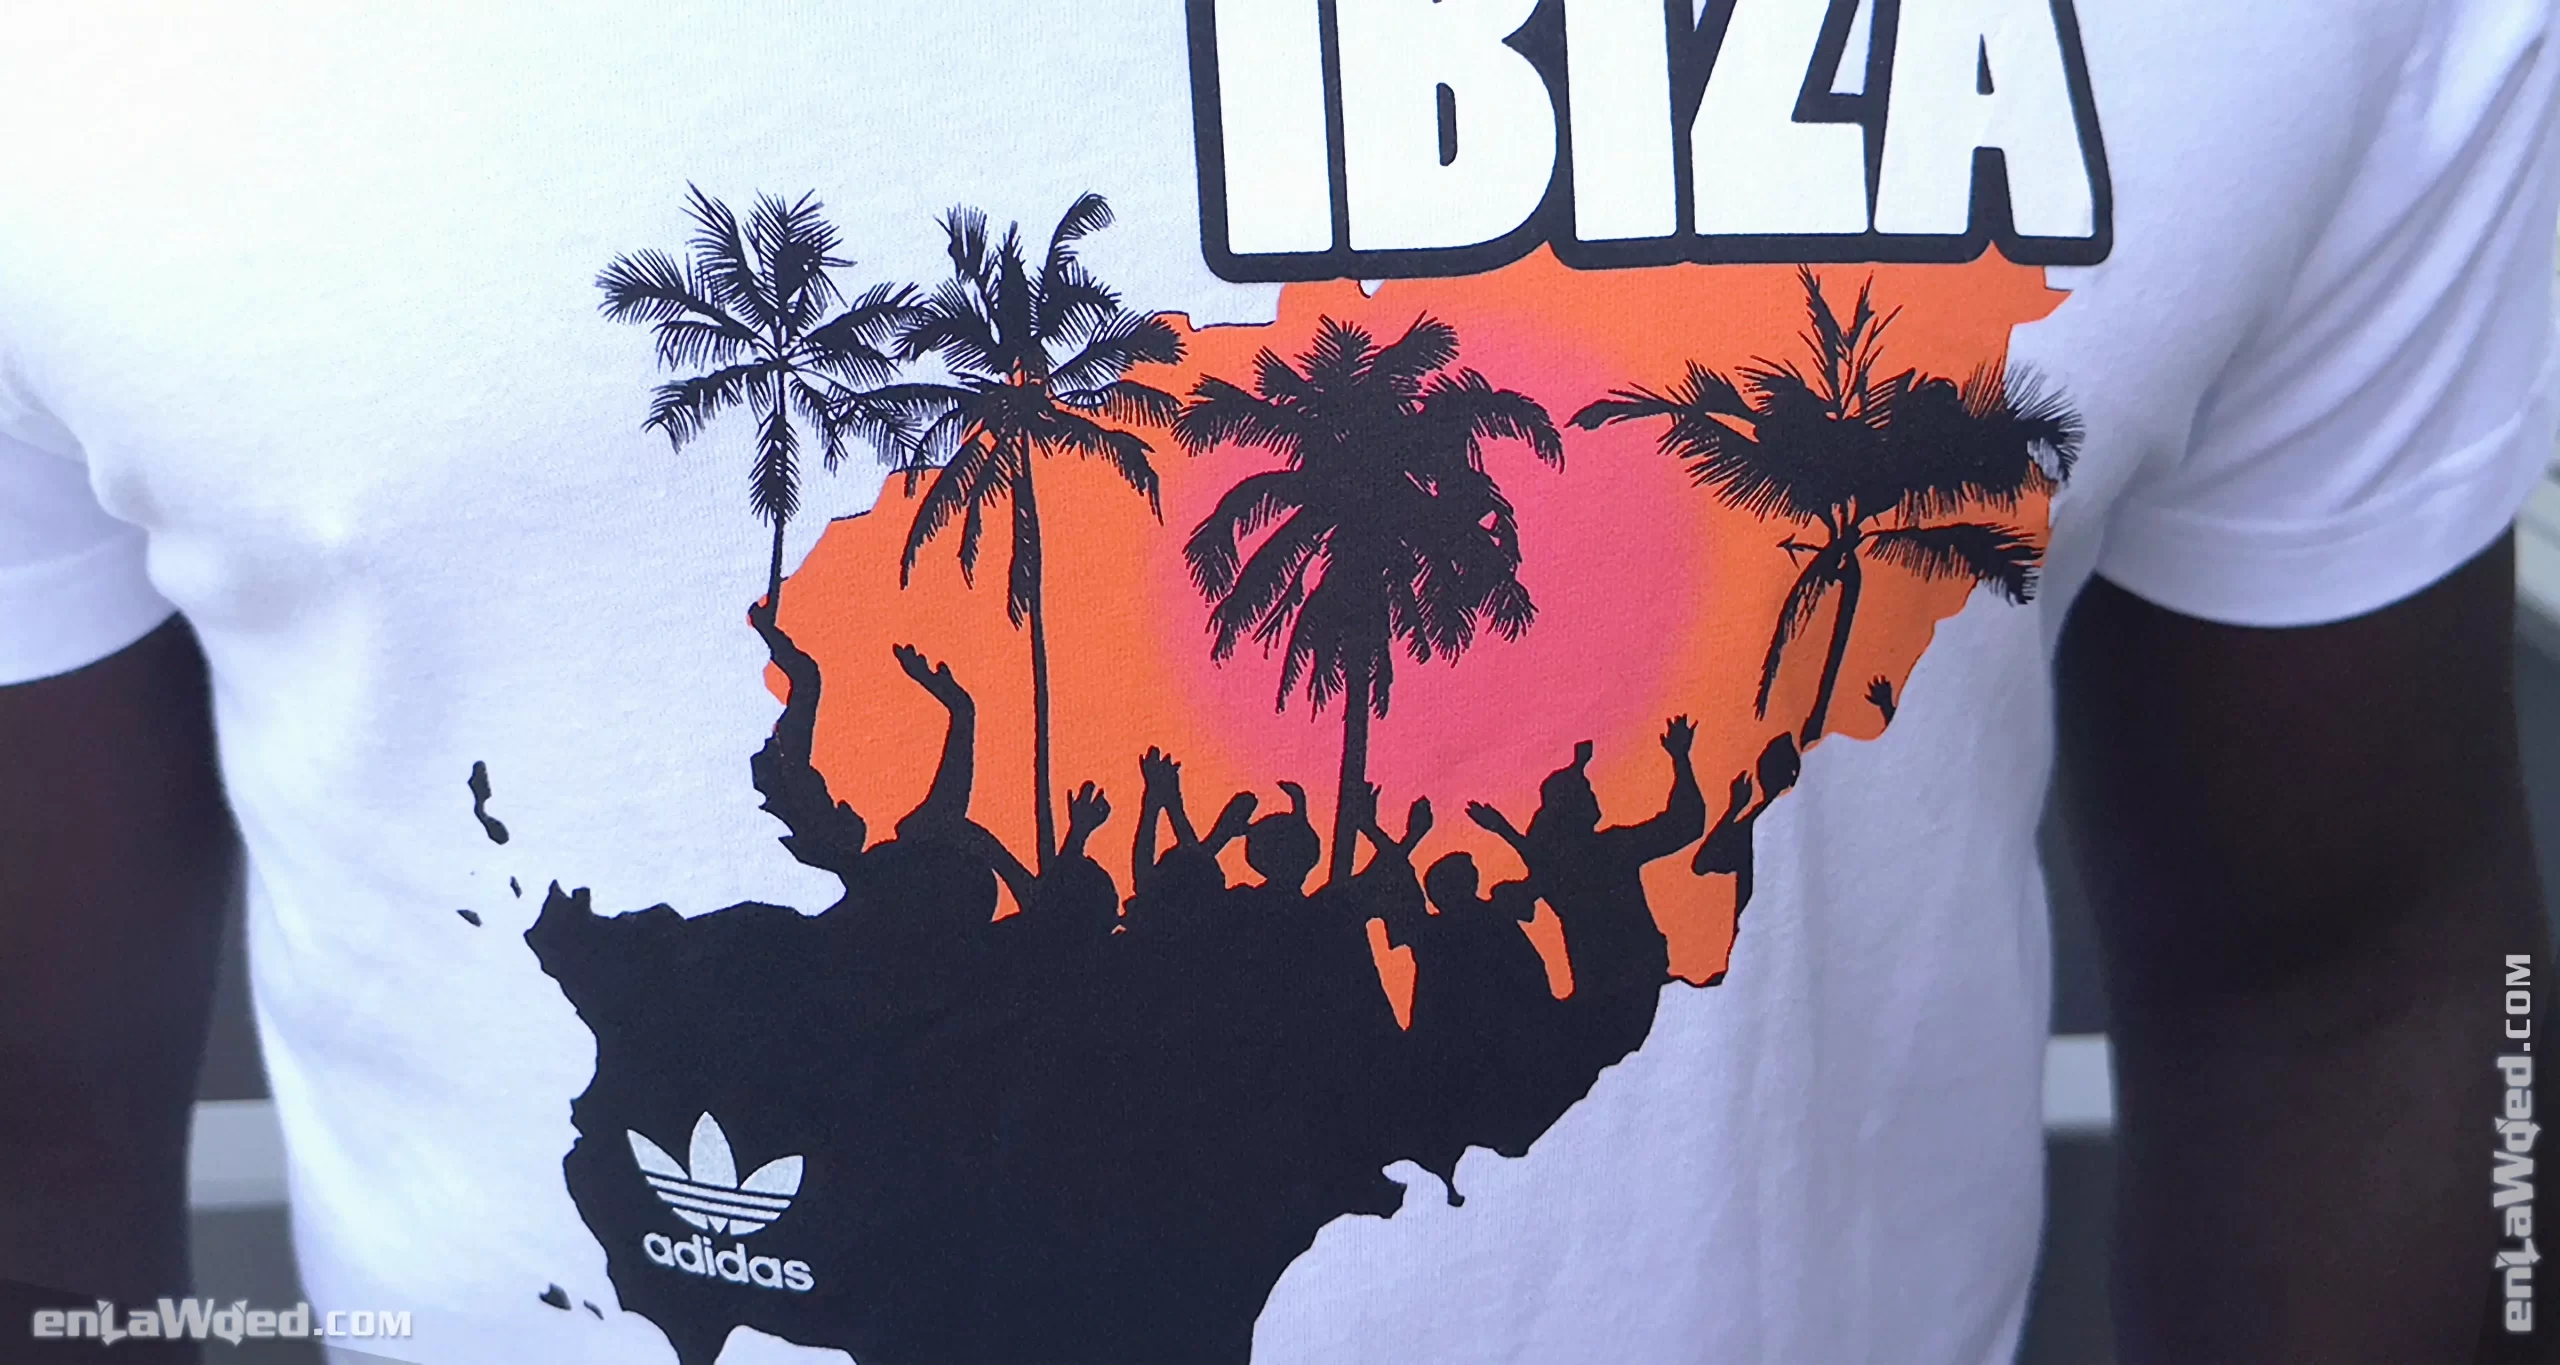 Men’s 2007 Ibiza T-Shirt by Adidas Originals: Ignite (EnLawded.com file #lmc5pb1utgnc5wtr12h)